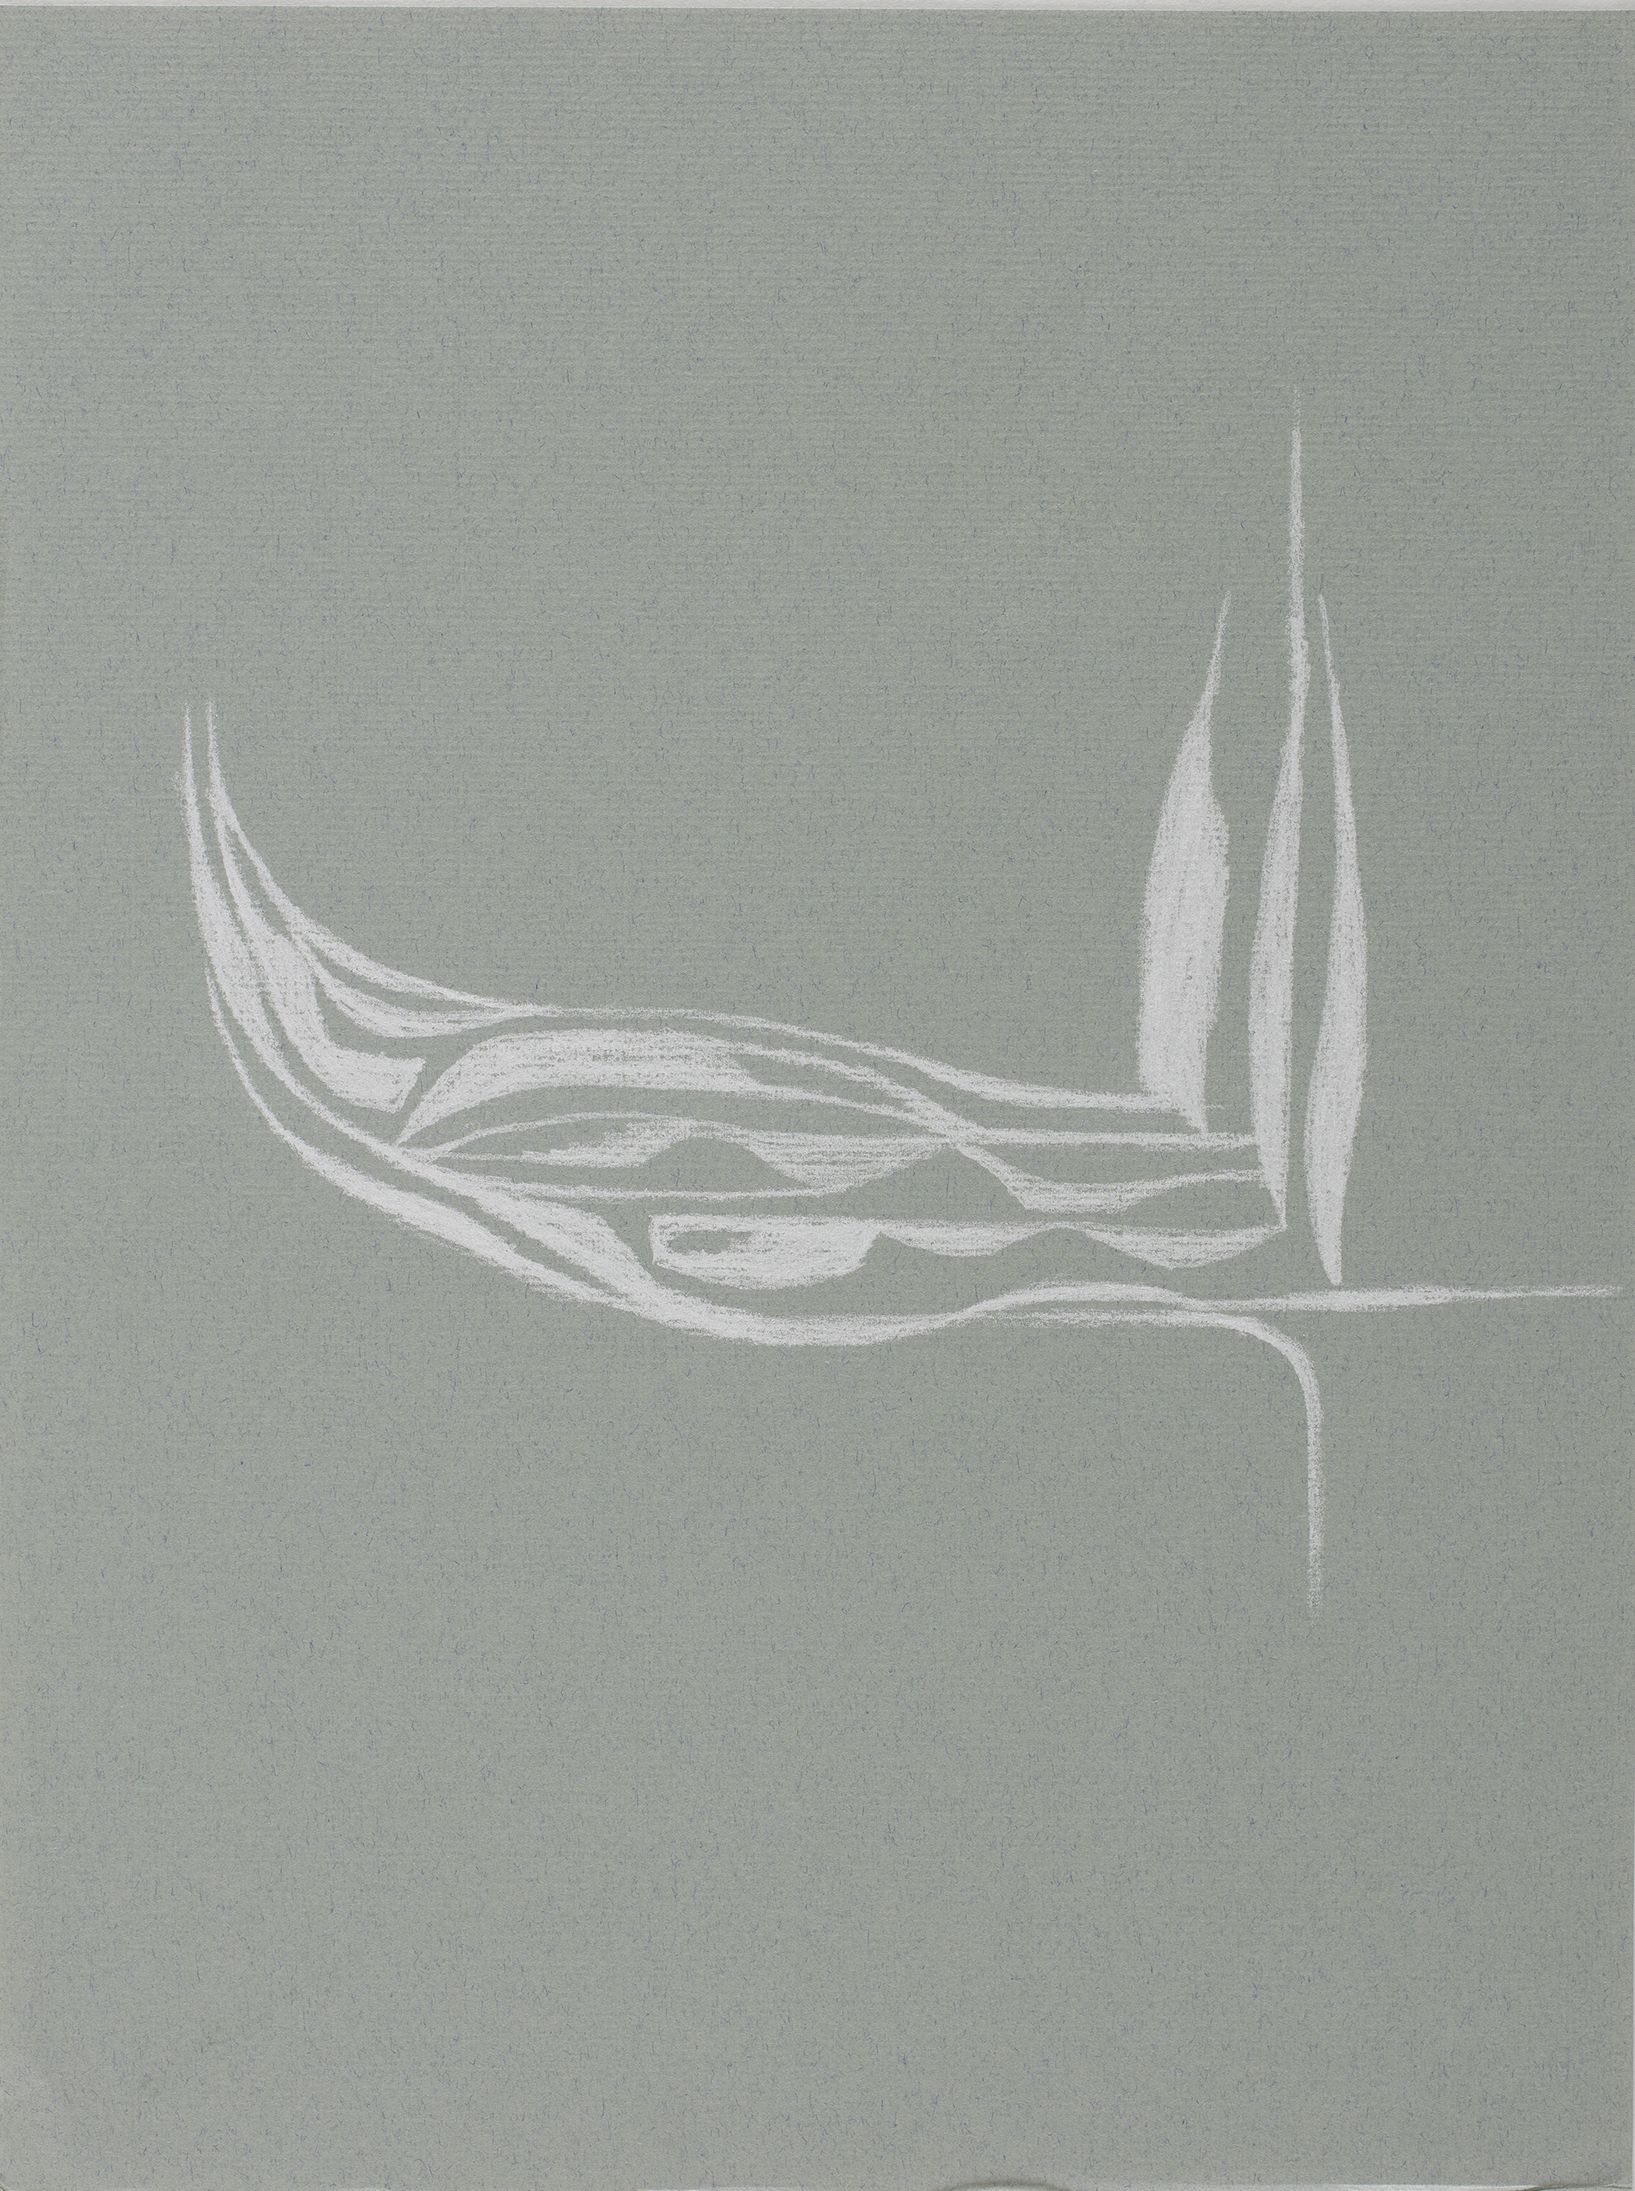 Untitled, 2014. Scott Olson (American, b. 1976). Chalk on paper, unframed: 12 1/2 x 9 1/2 in. © Scott Olson